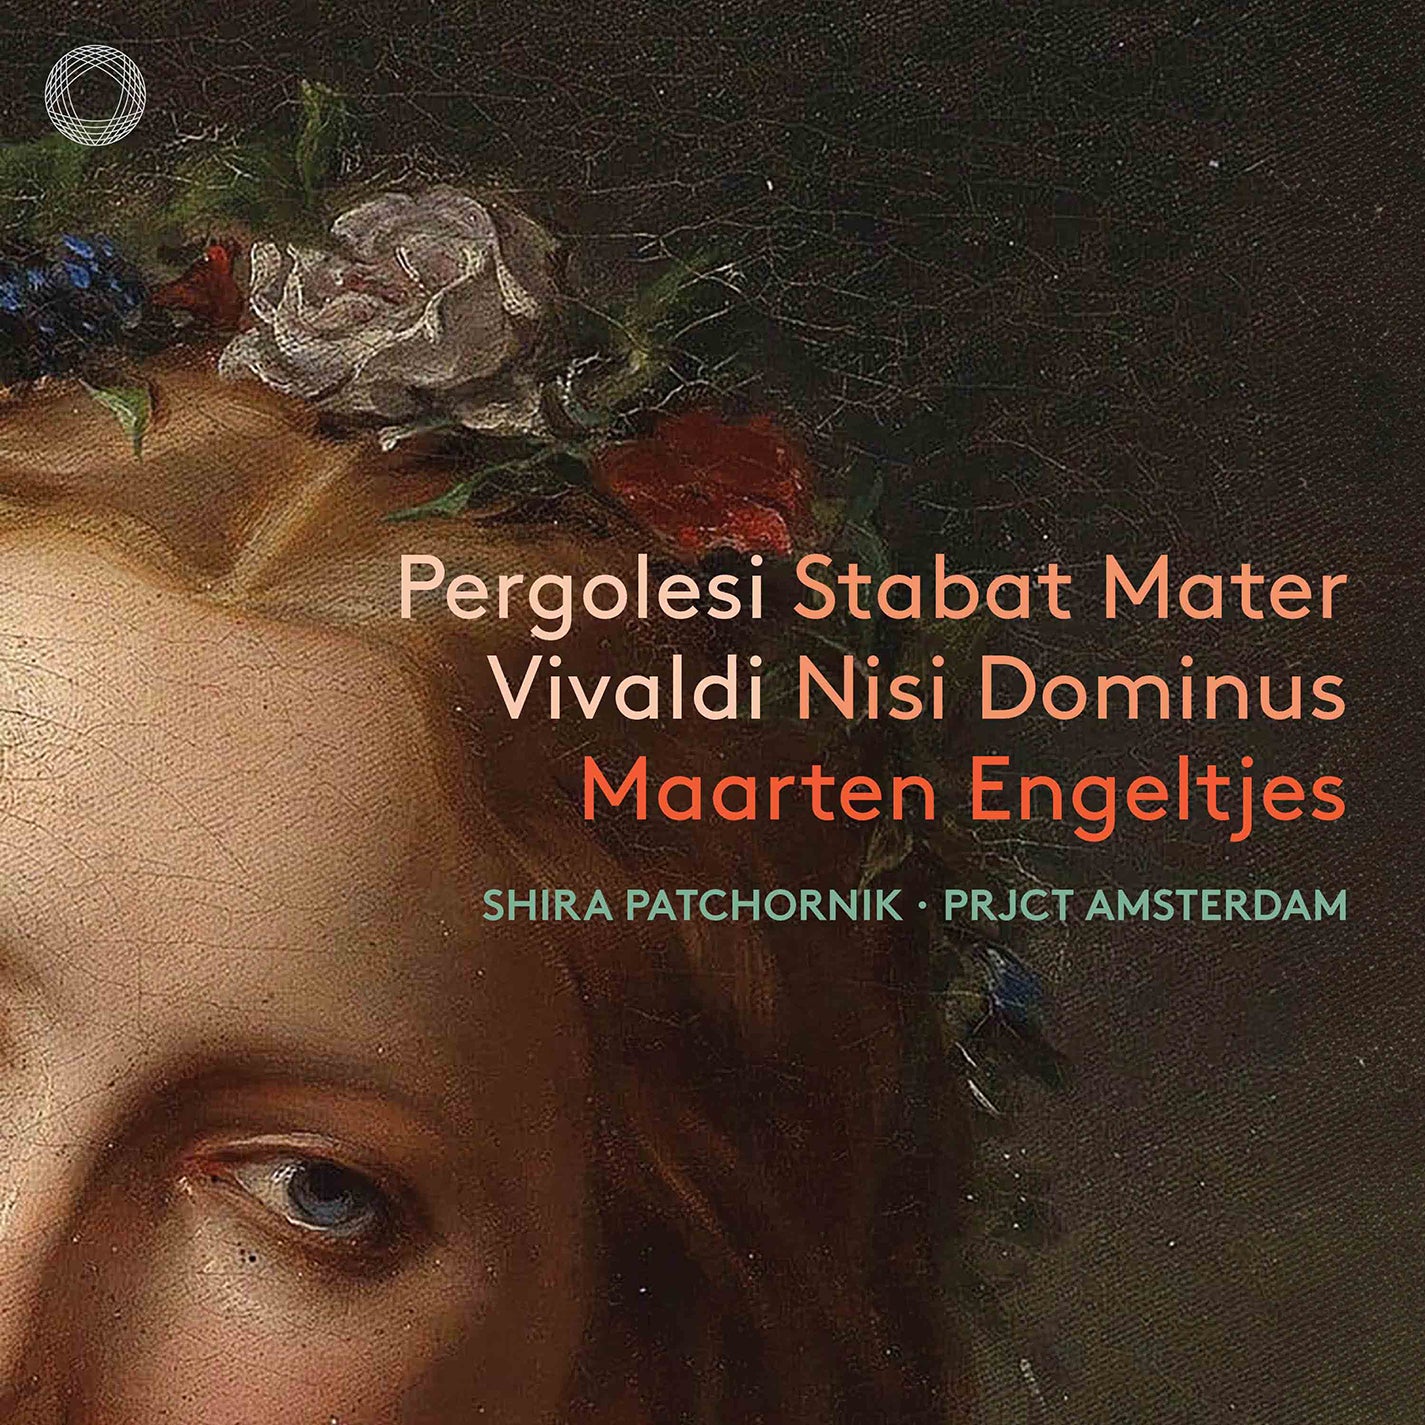 Pergolesi: Stabat Mater - Vivaldi: Nisi Dominus / Engeltjes, PRJCT Amsterdam